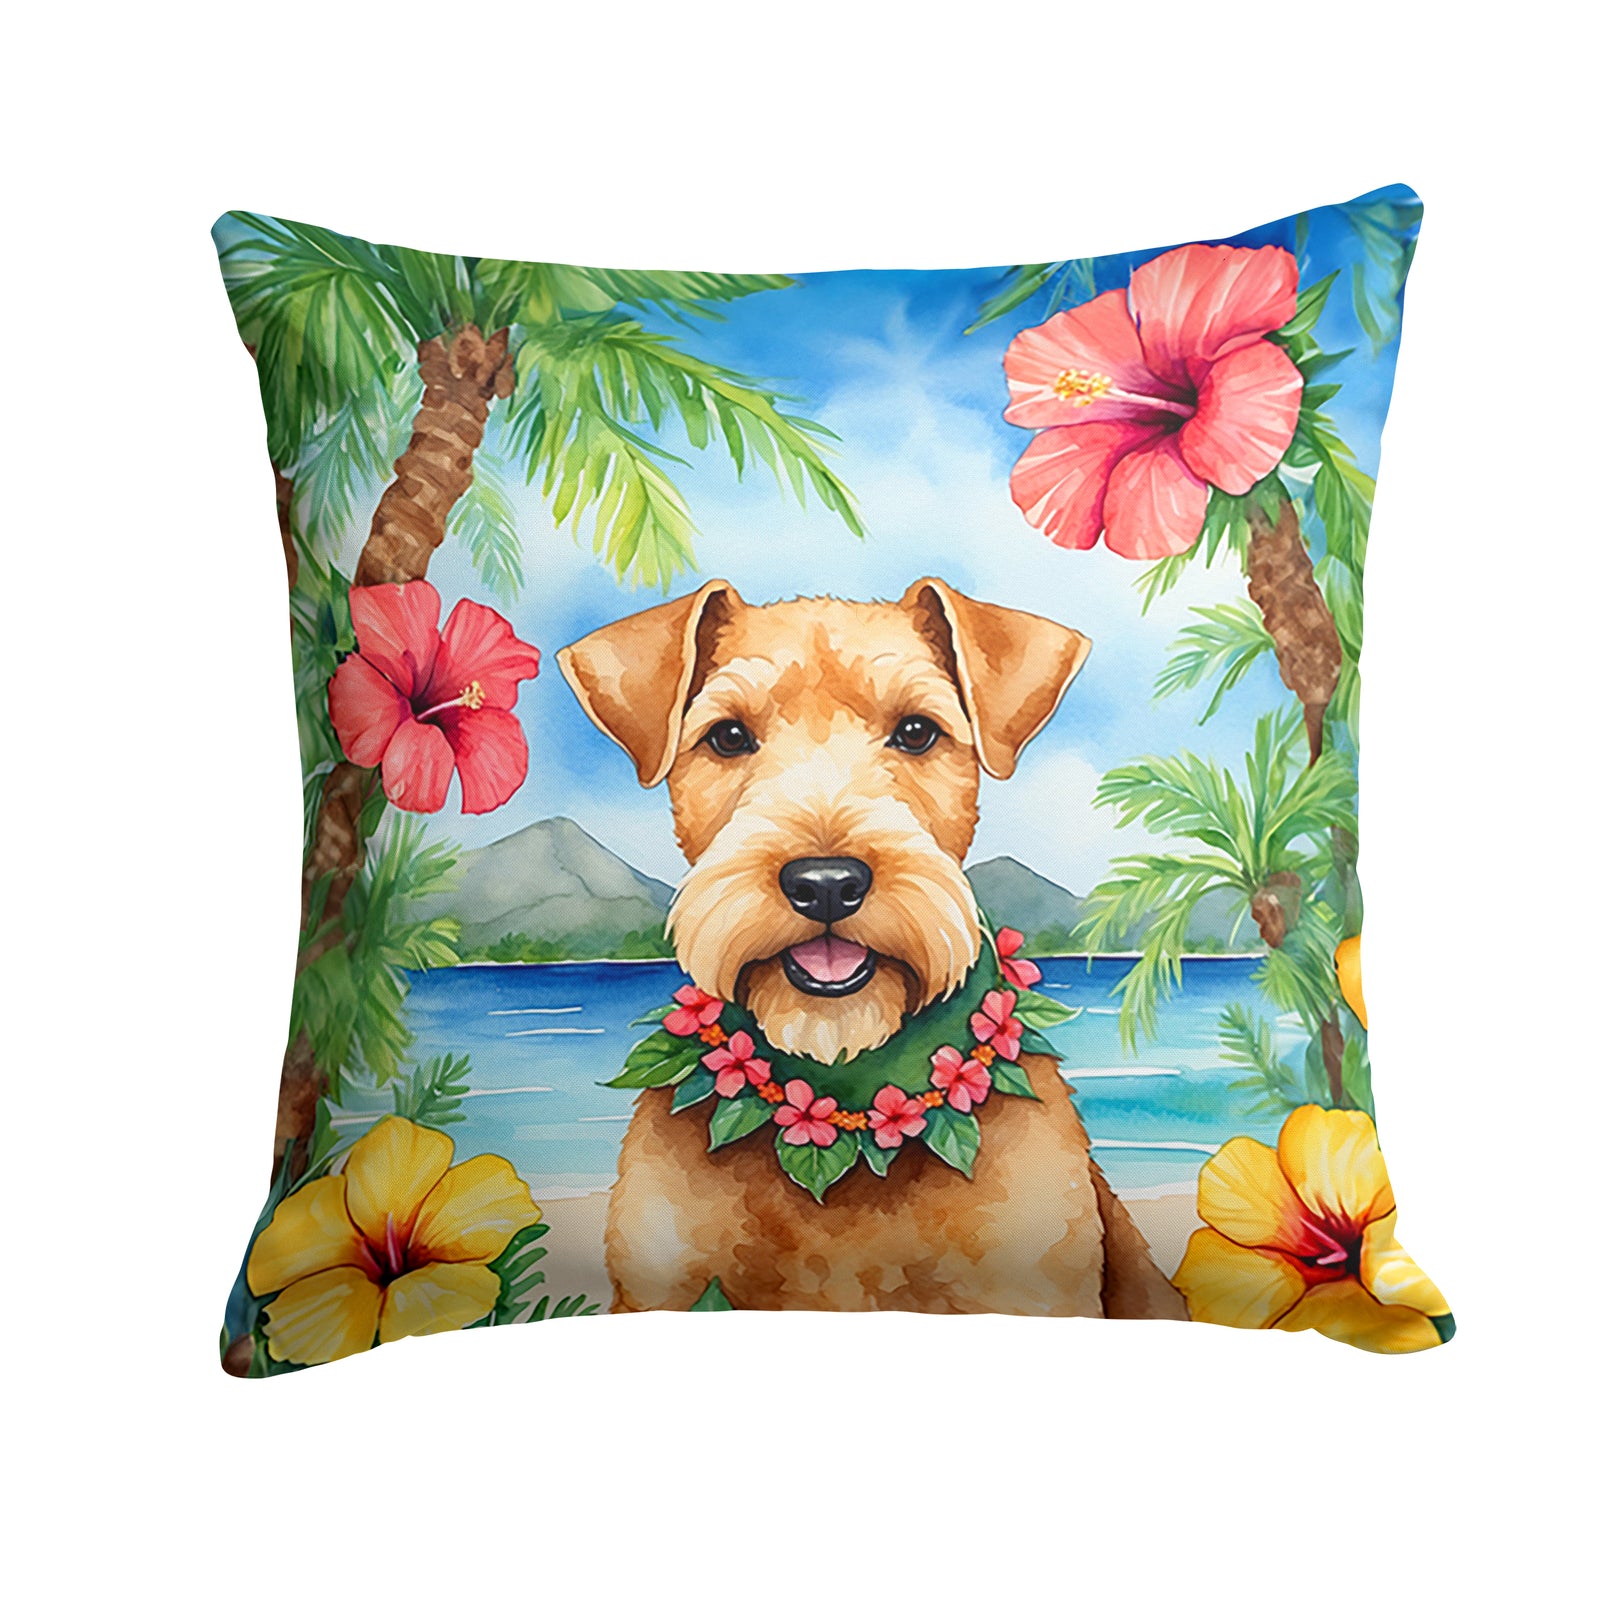 Buy this Lakeland Terrier Luau Throw Pillow